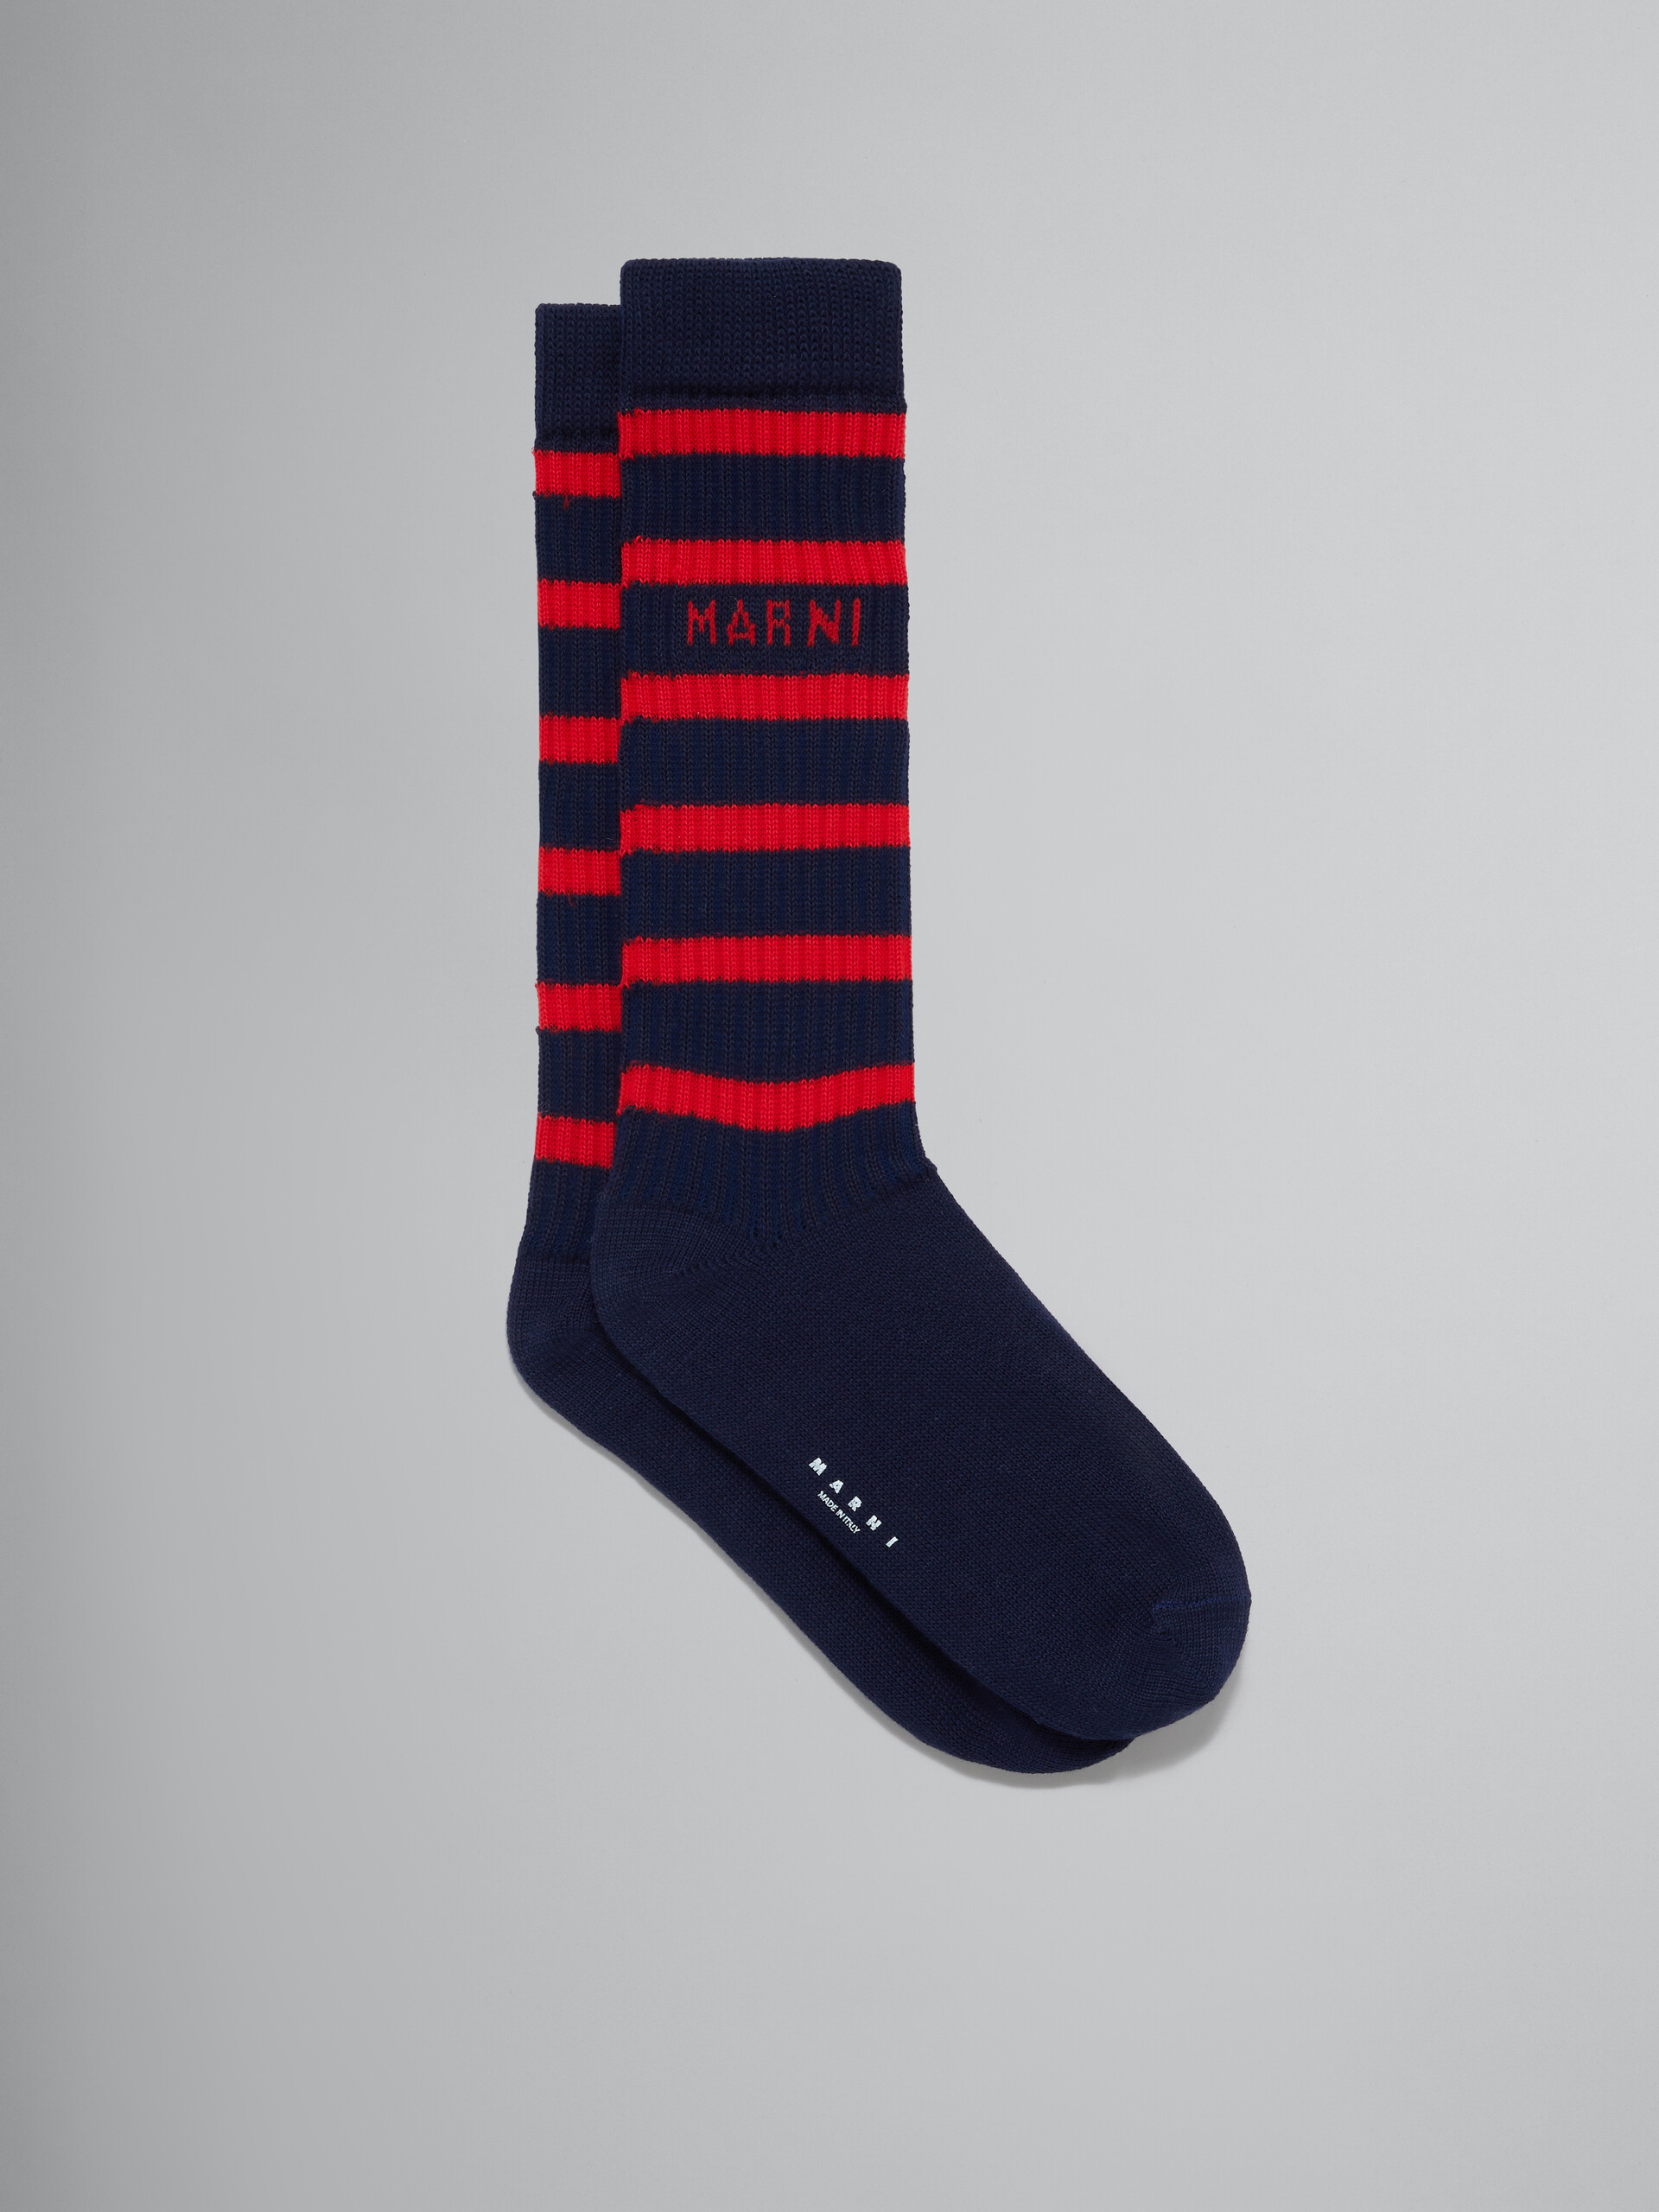 Navy ribbed cotton socks with sailor stripes - Socks - Image 1